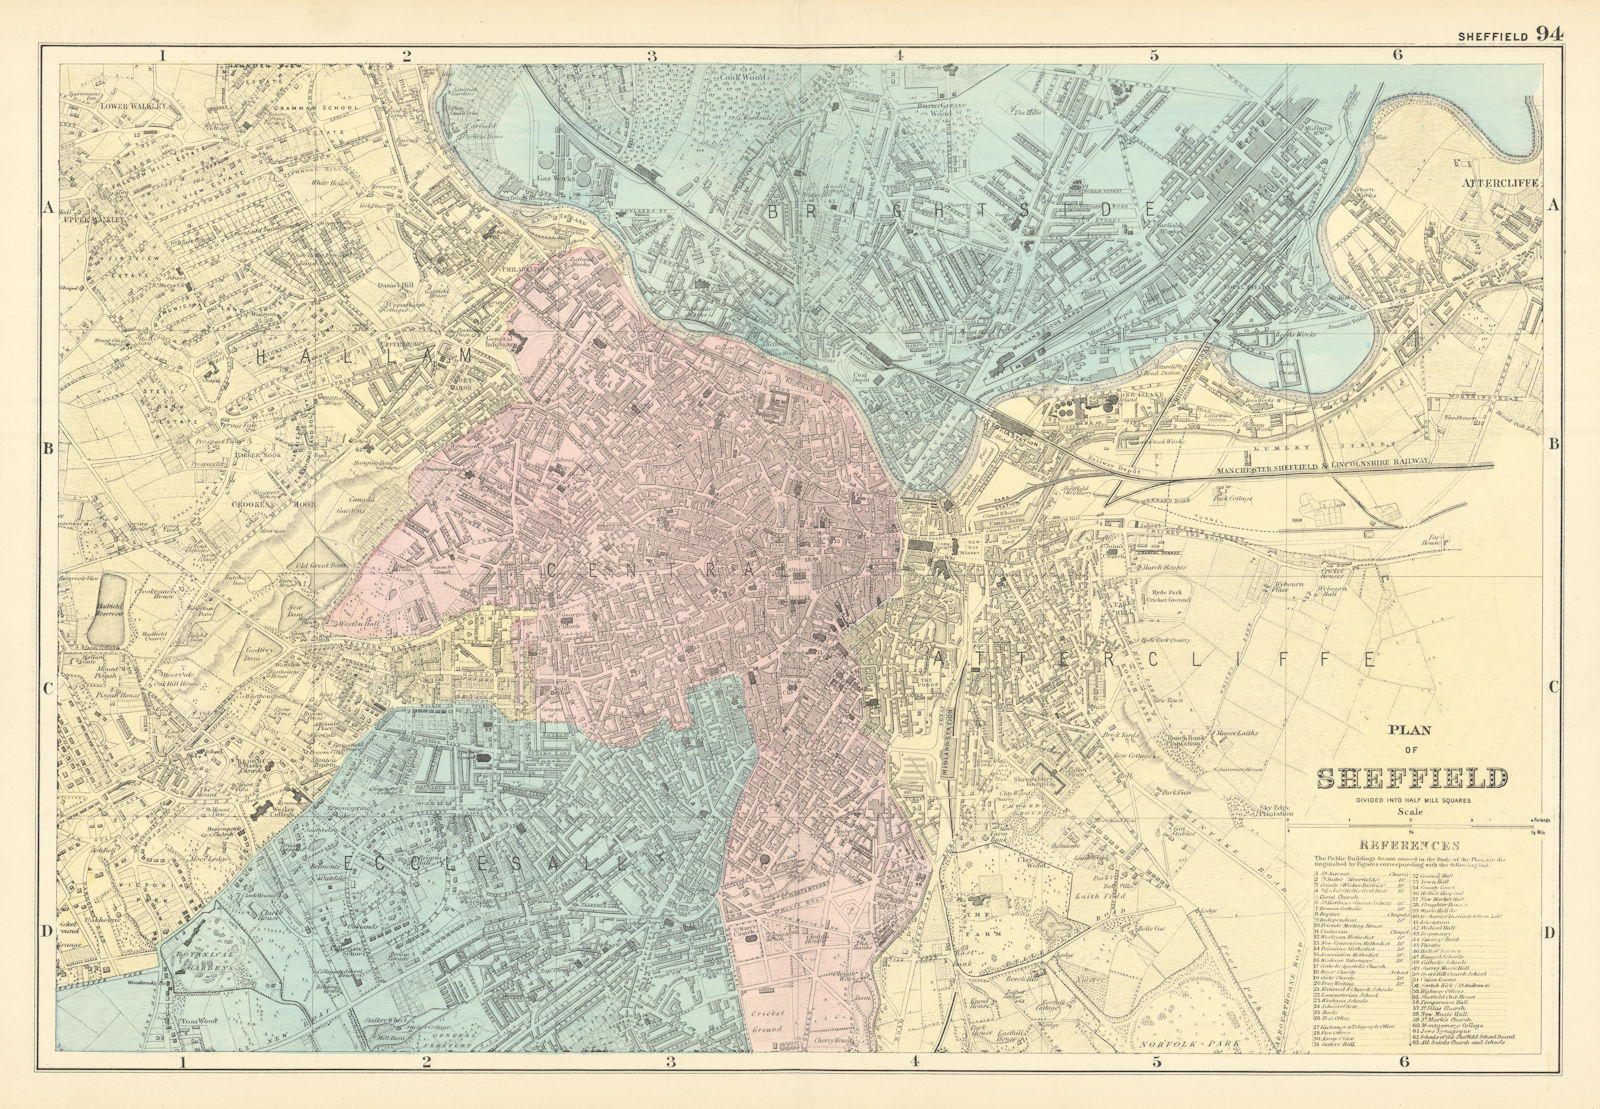 SHEFFIELD town city plan Attercliffe Ecclesall Brightside Hallam. BACON 1891 map